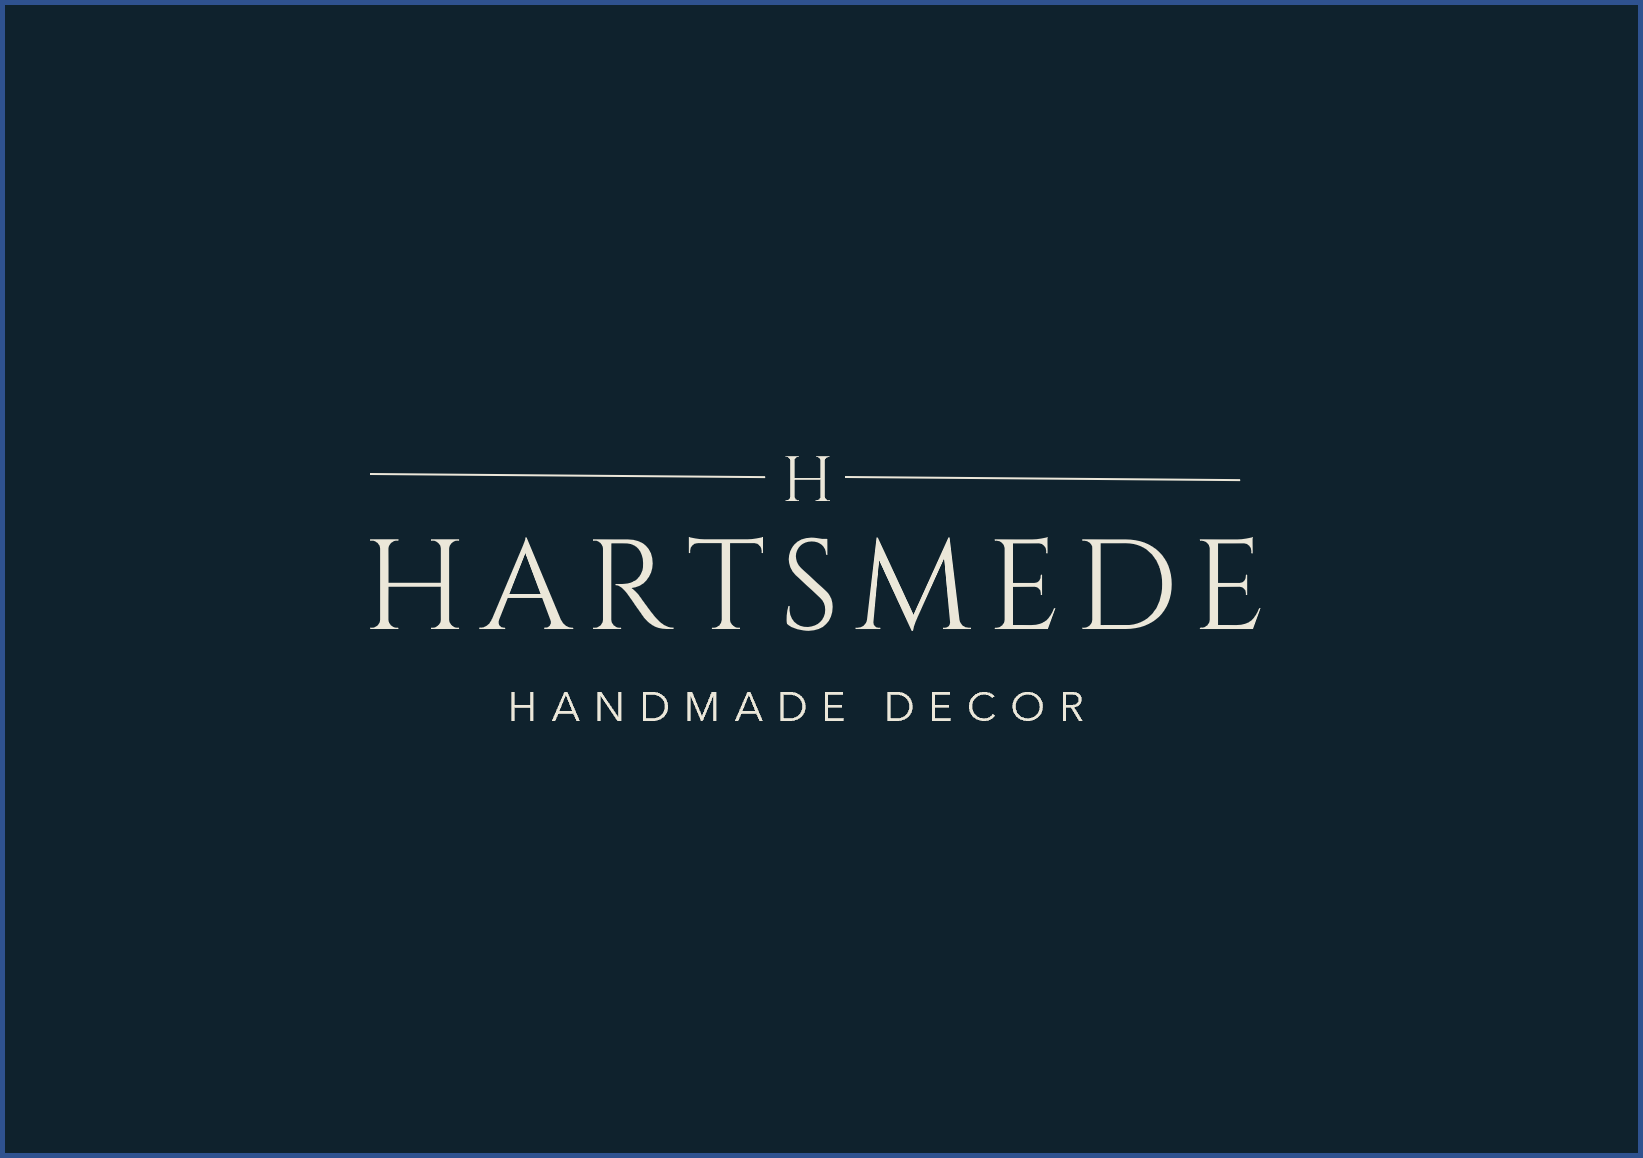 Hartsmede - Handmade Décor